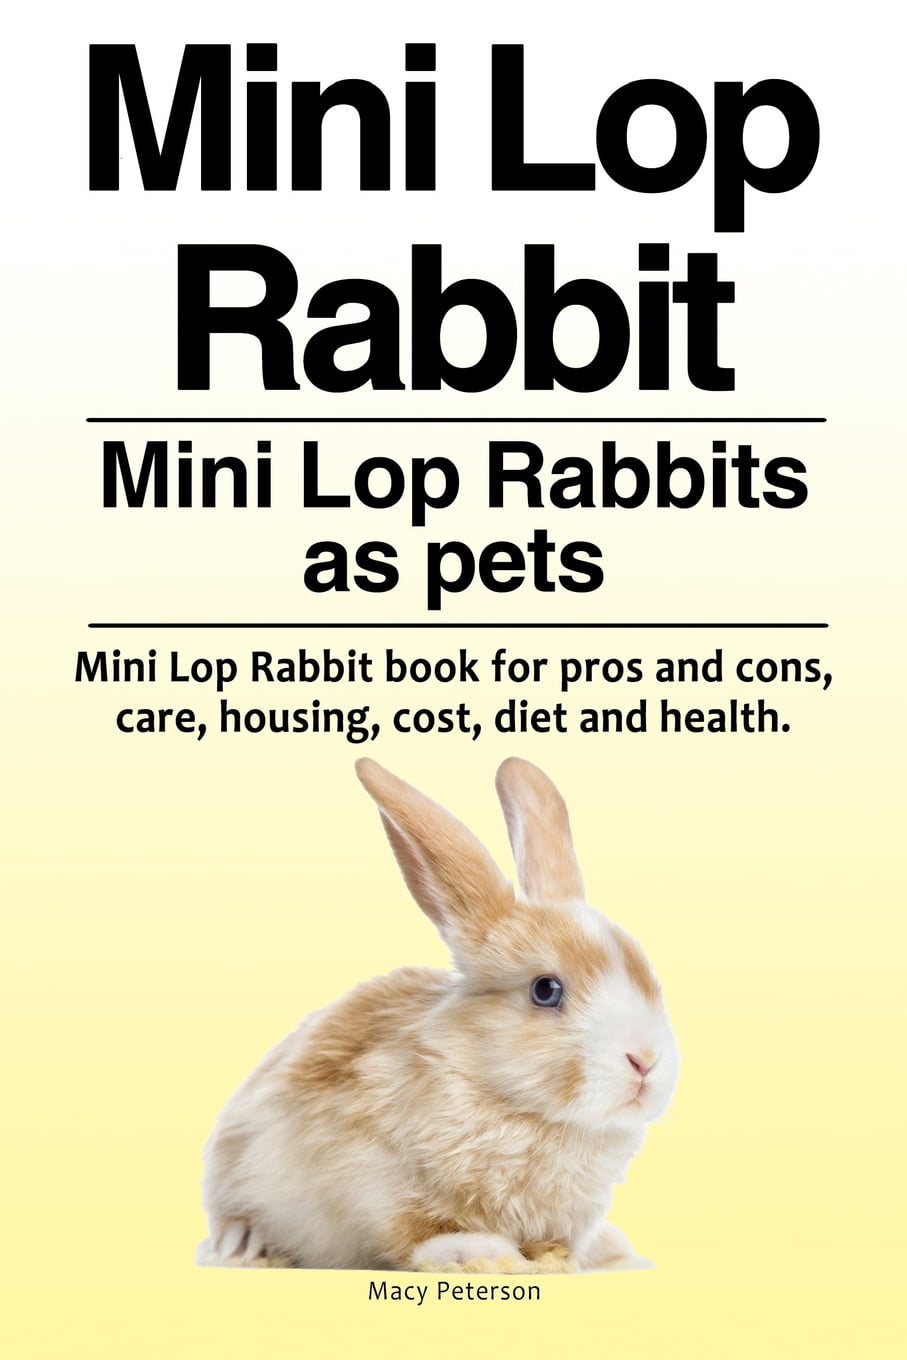 lop rabbit care